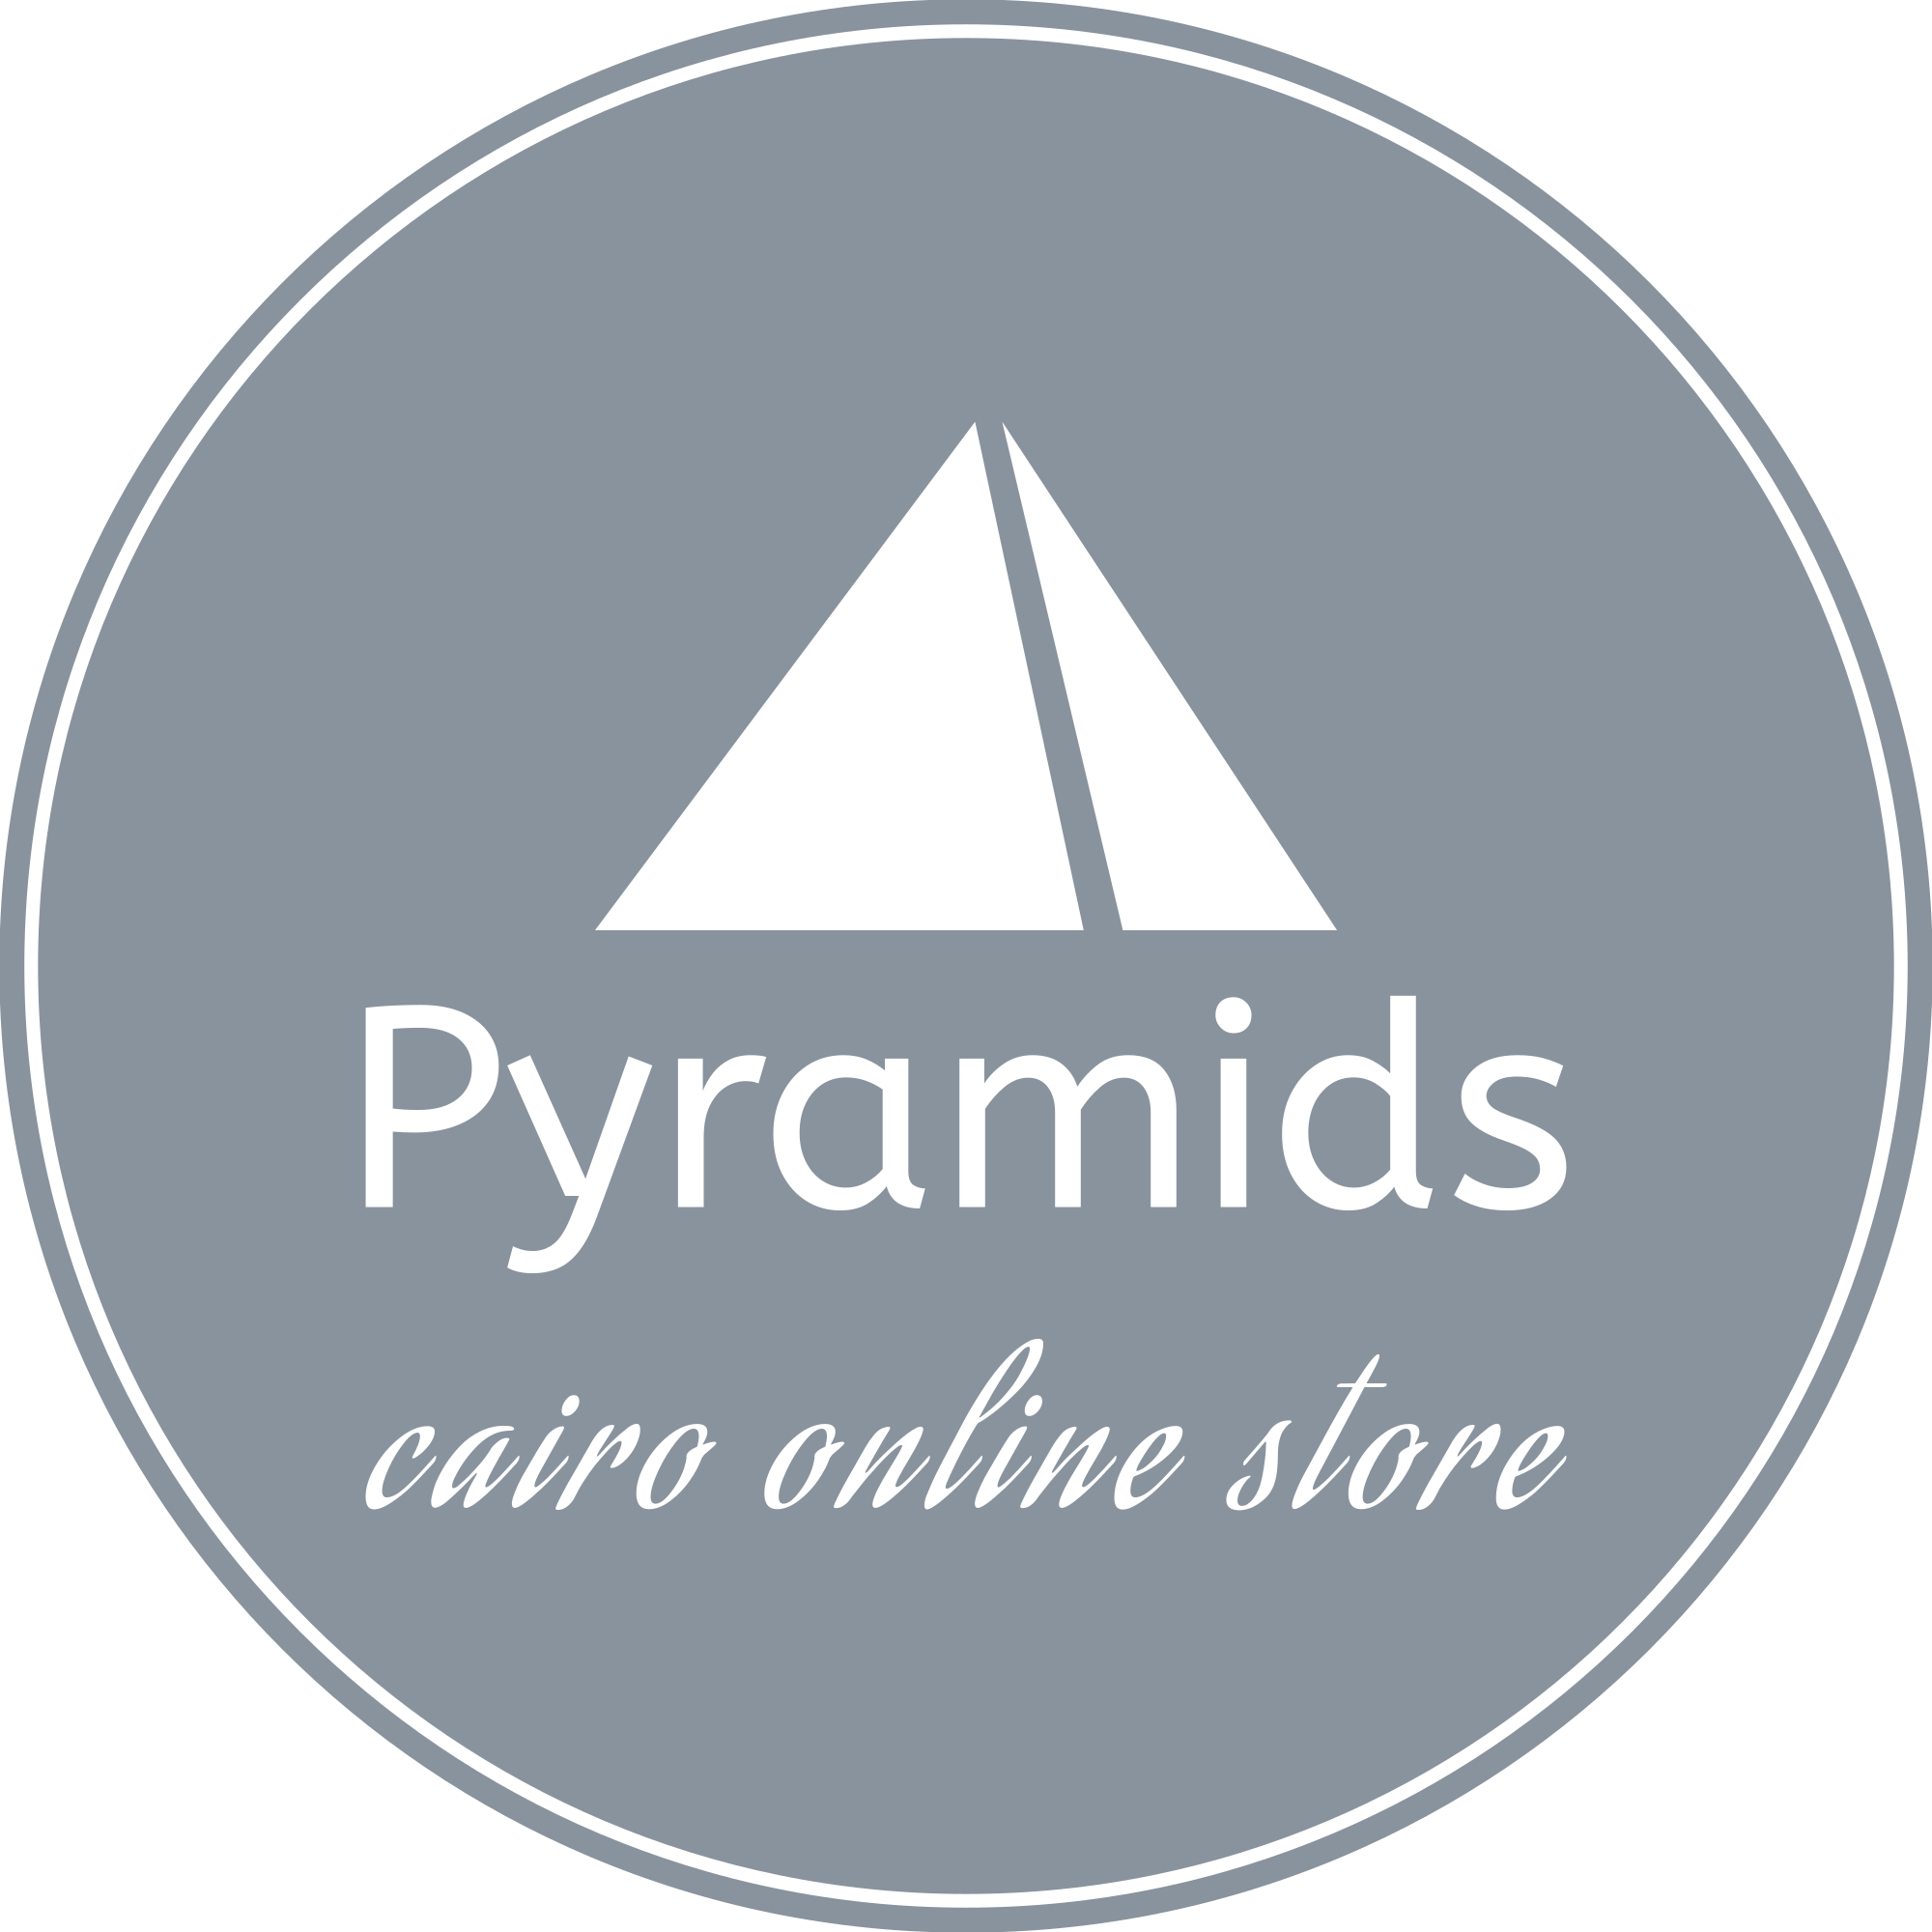 Pyramids Cairo